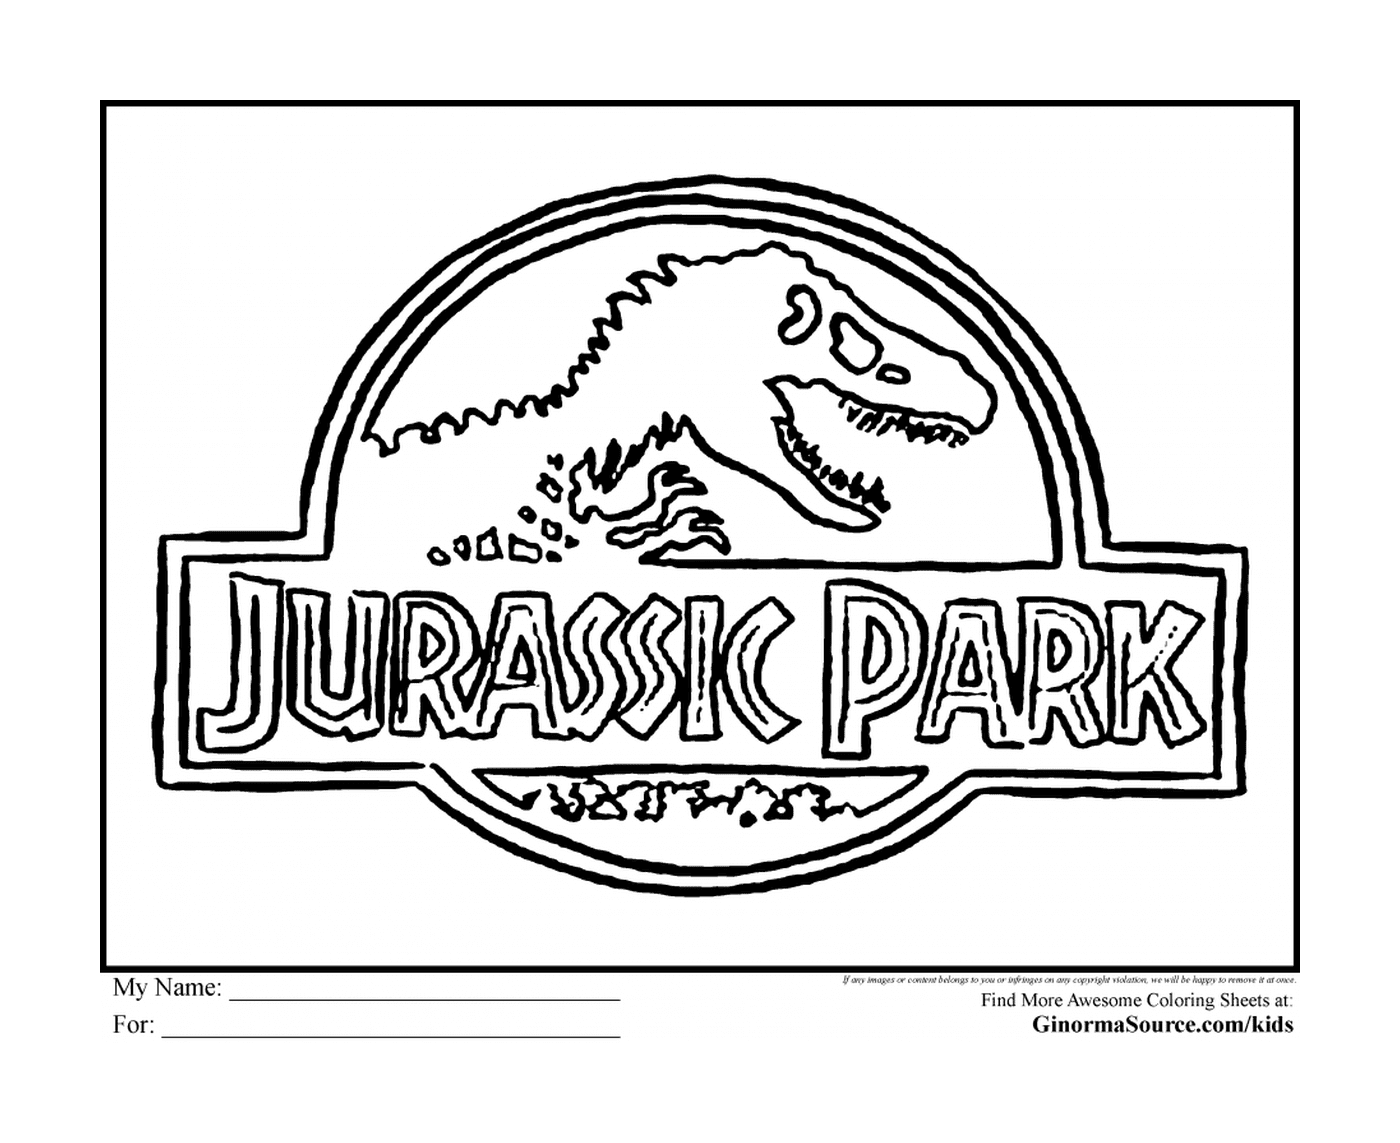  Logo de Jurassic Park, símbolo de aventura 